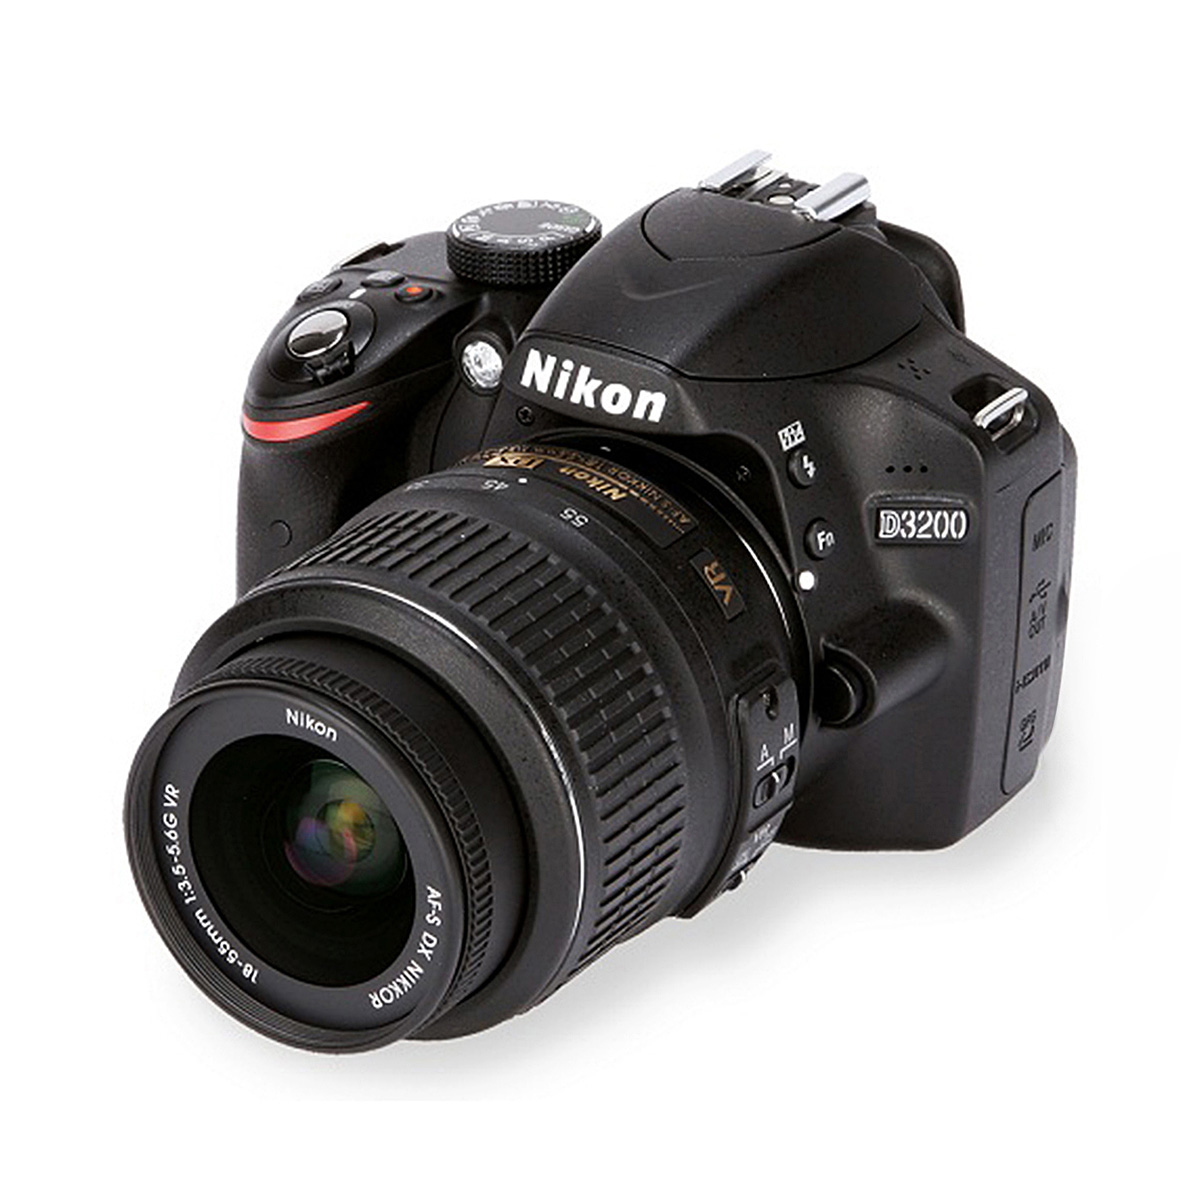 Nikon d750 DSLR Camera - Best Price in Bangladesh | Daraz.com.bd